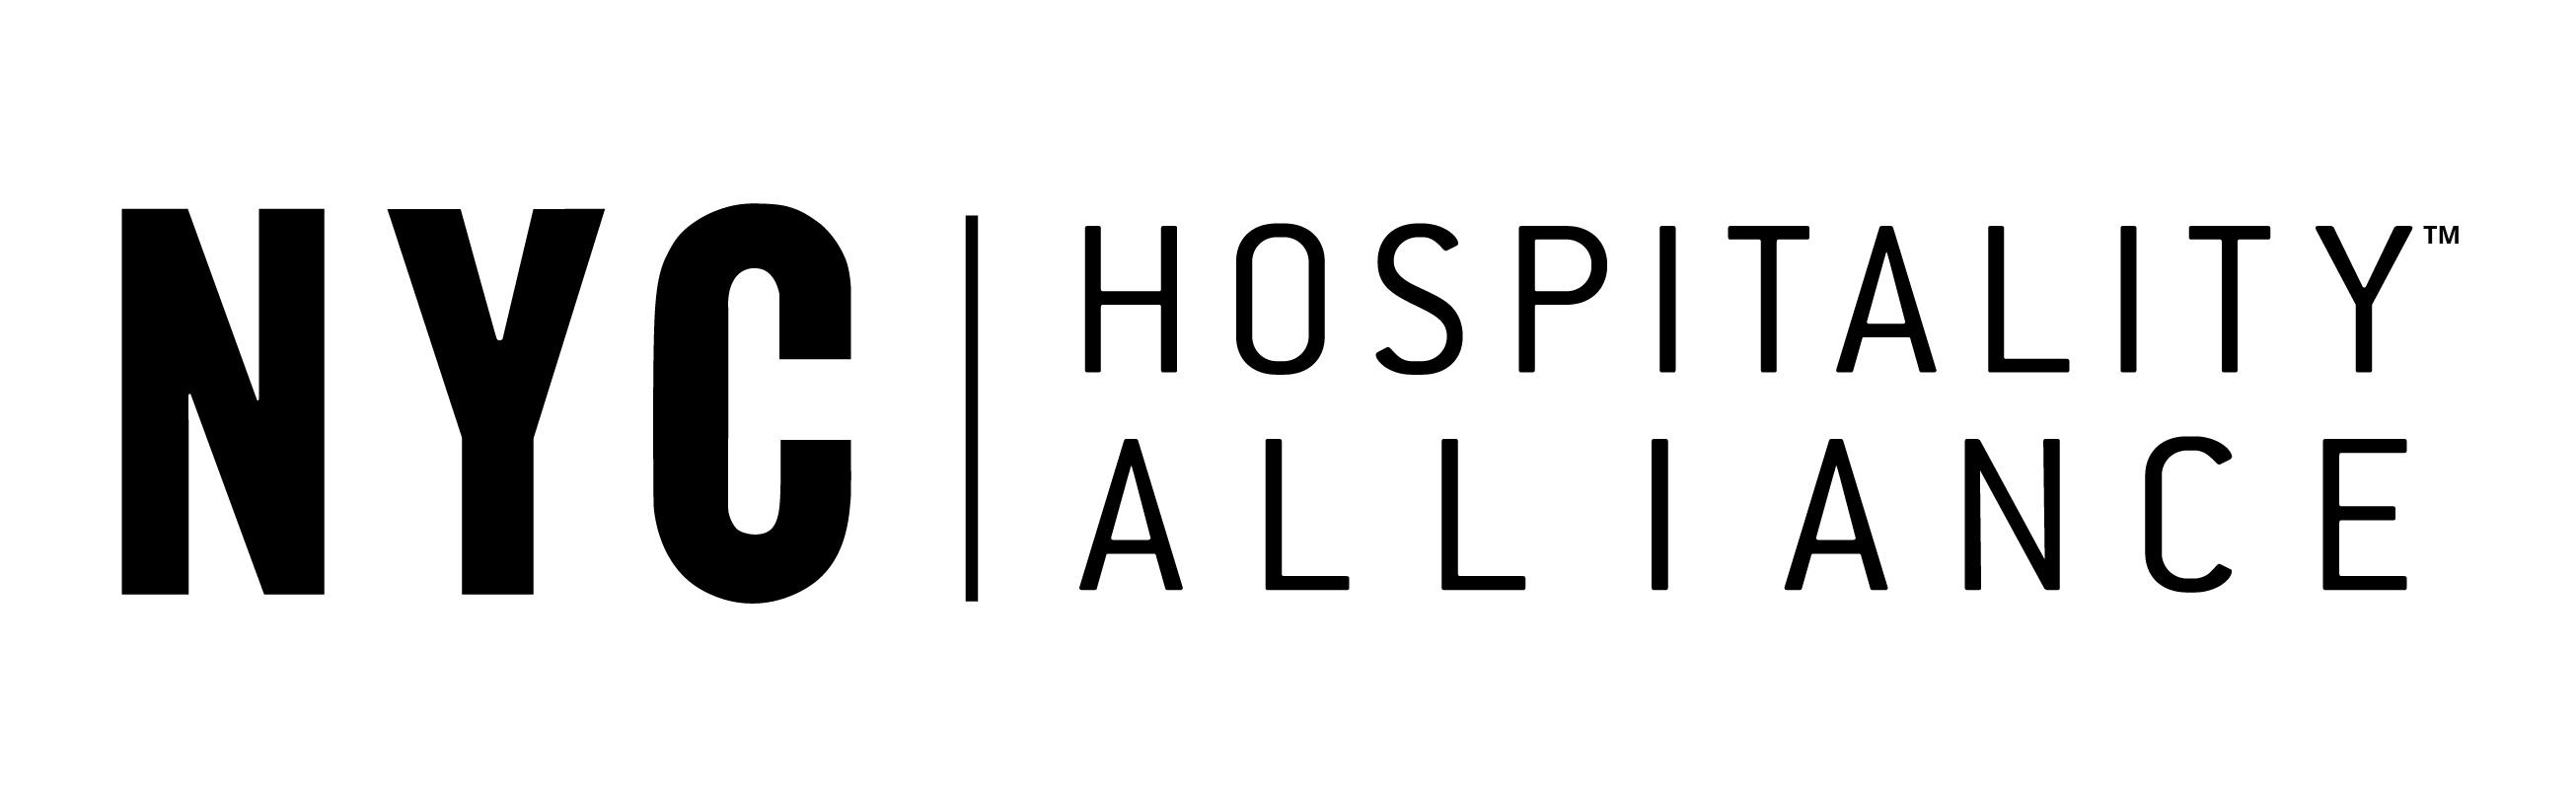 Black Alliance Logo NoBackground.png